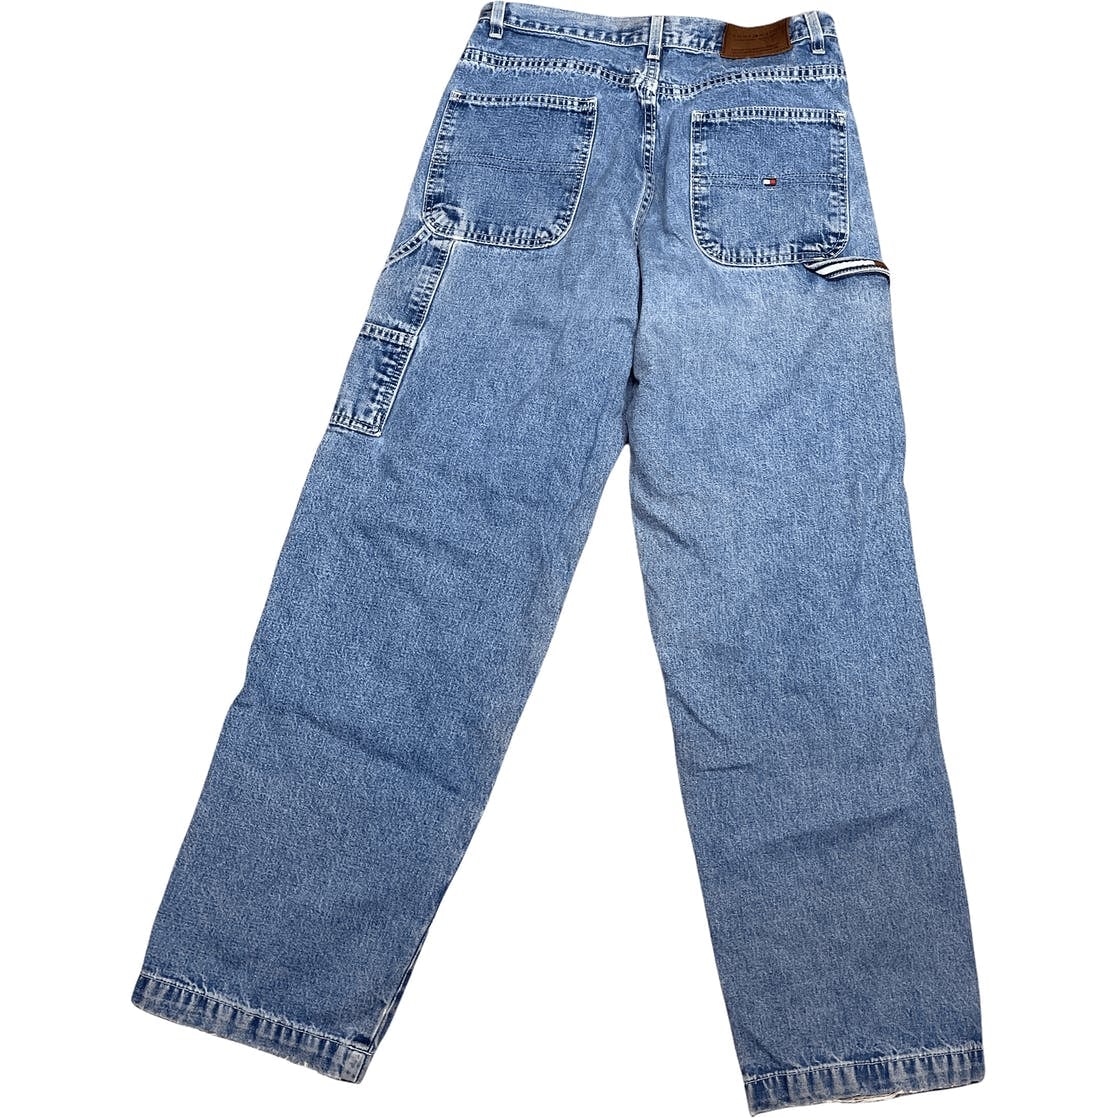 Tommy Hilfiger Carpenter Jeans | Vintage Jeans: Where to Shop the Denim Archives Plus 22 Rare Finds We Love | POPSUGAR Fashion Photo 11